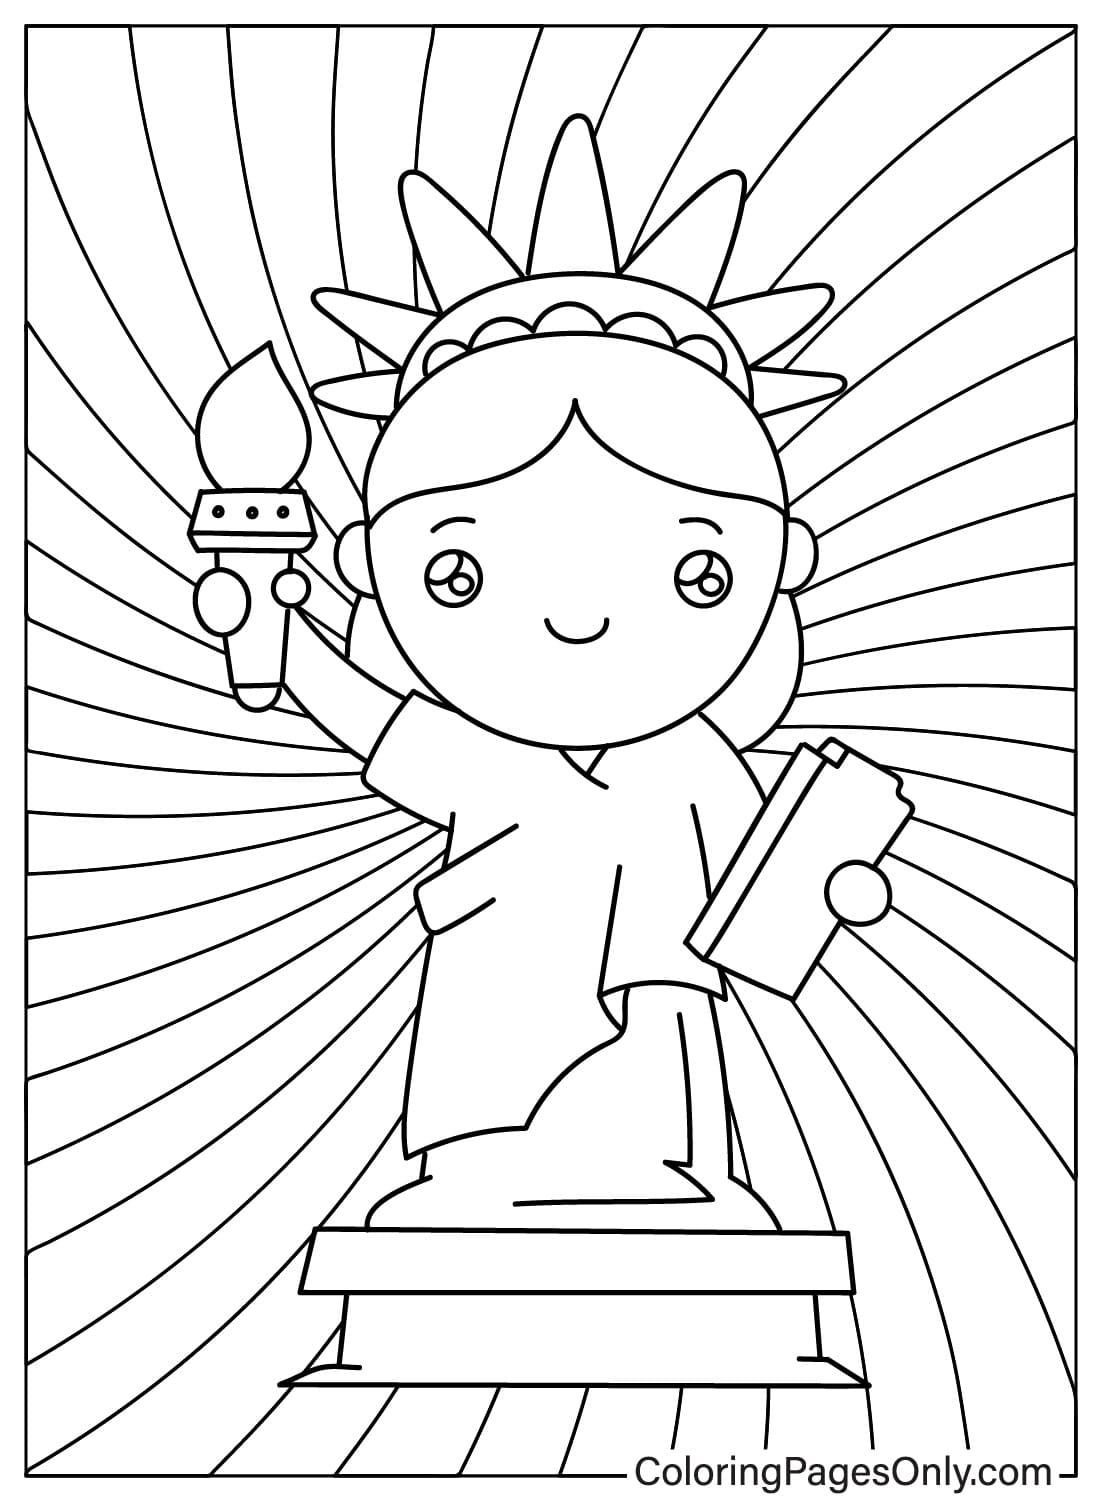 Dibujo para colorear de la estatua de la libertad de Chibi